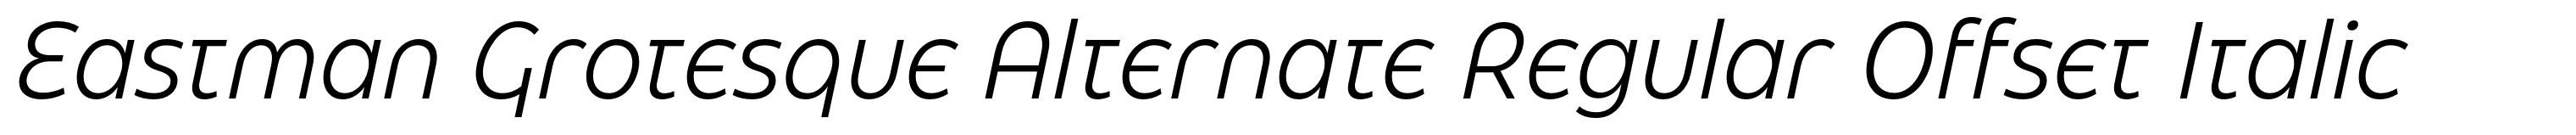 Eastman Grotesque Alternate Regular Offset Italic